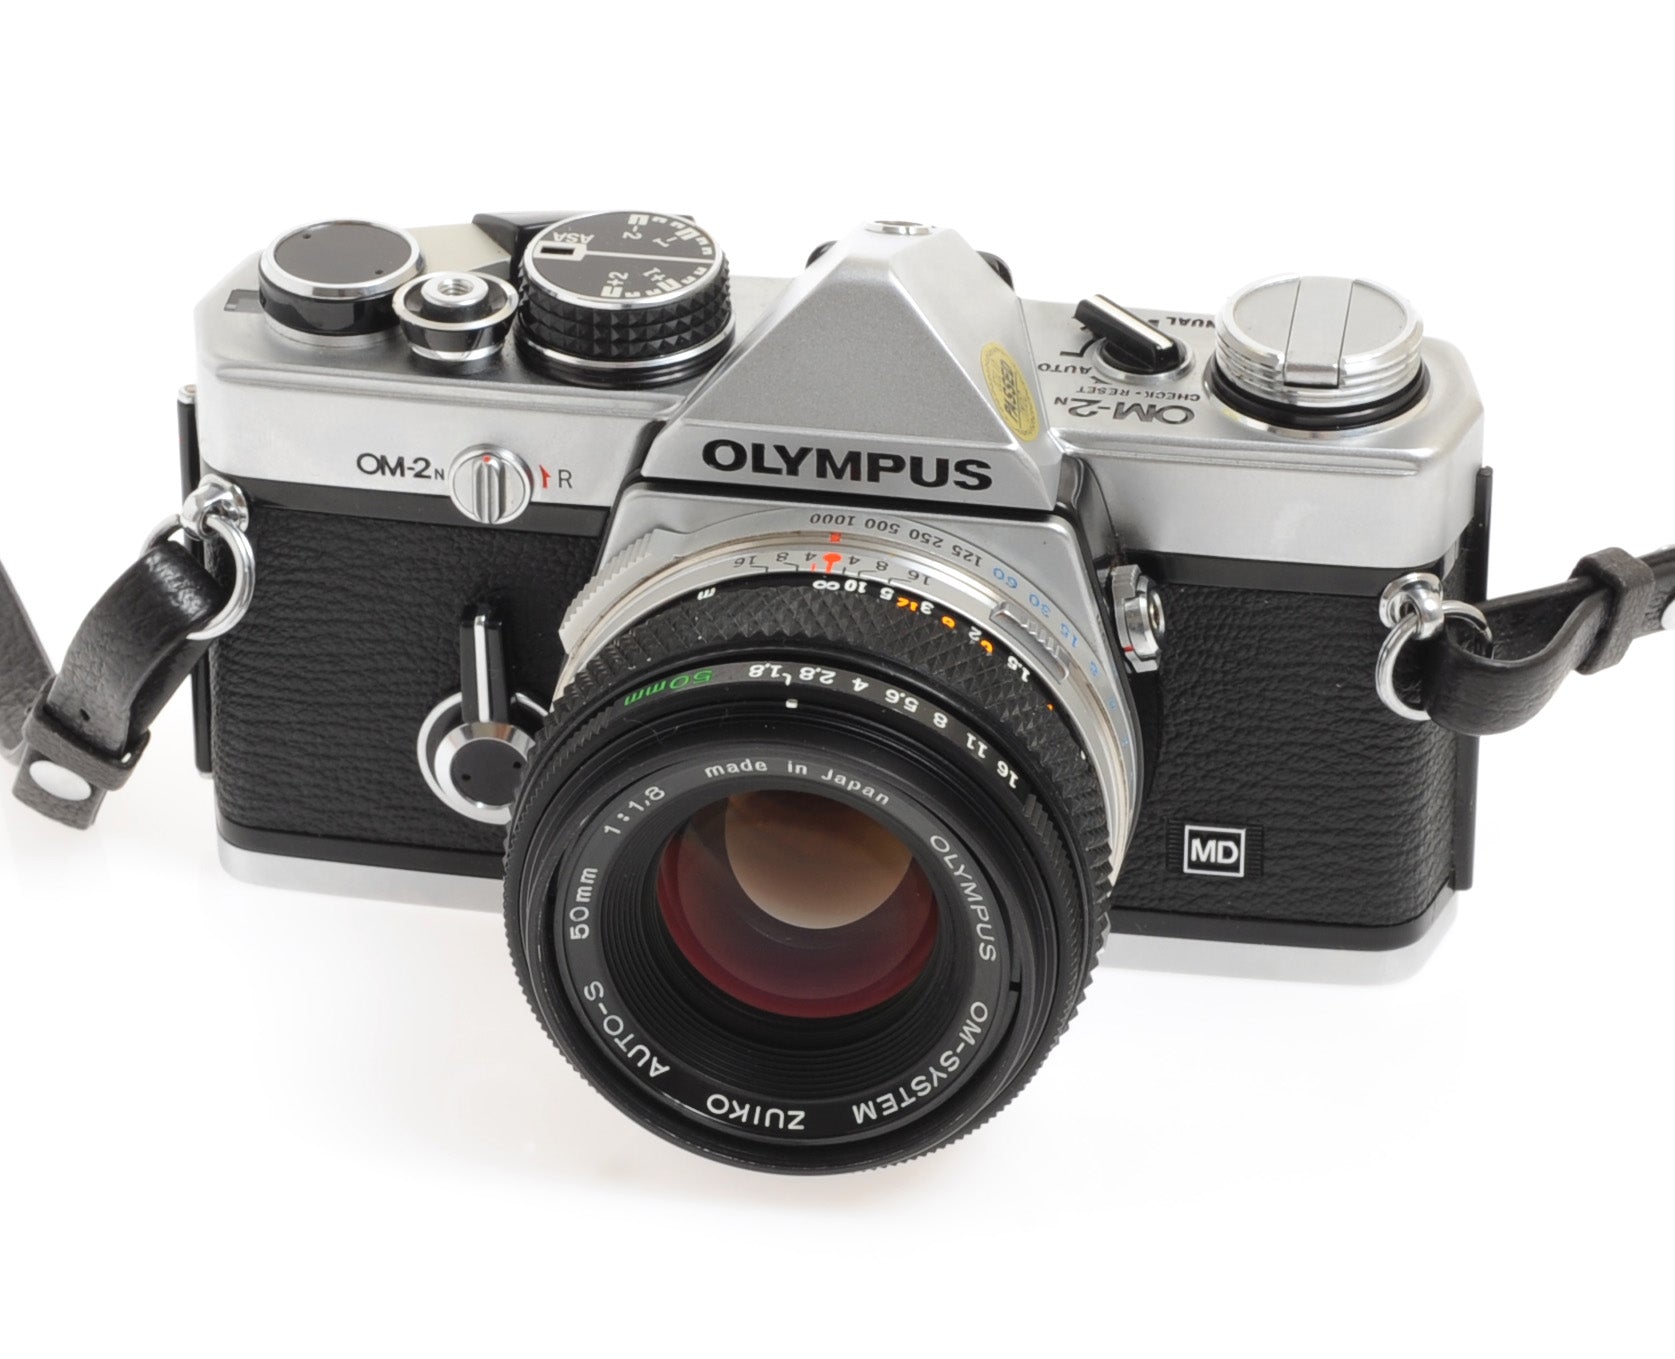 Olympus OM-2N OM2N Chrome 35mm SLR Film Camera w/ 50mm F1.8 Lens -New